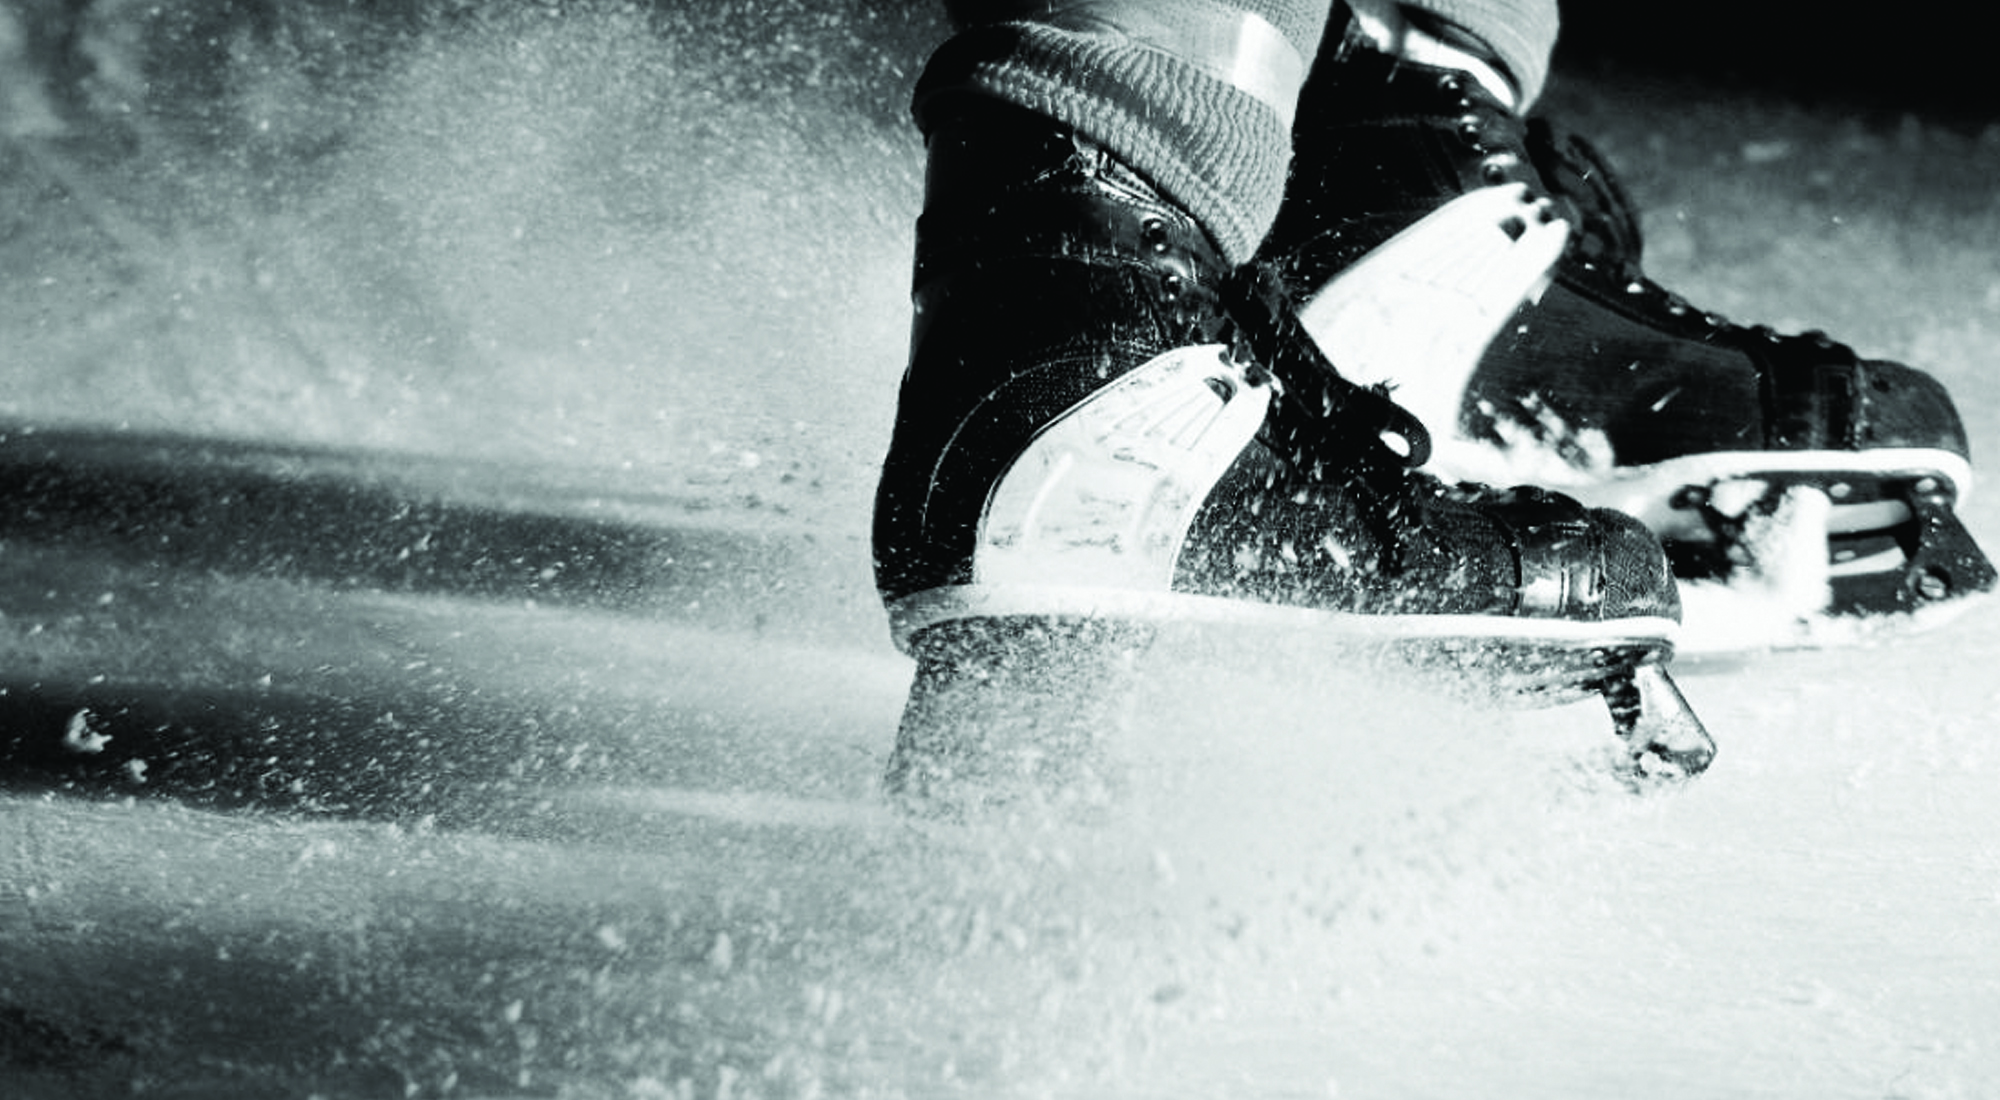 Ice hockey skate. Коньки на льду. Хоккейные коньки на льду. Конек. Каток коньки.